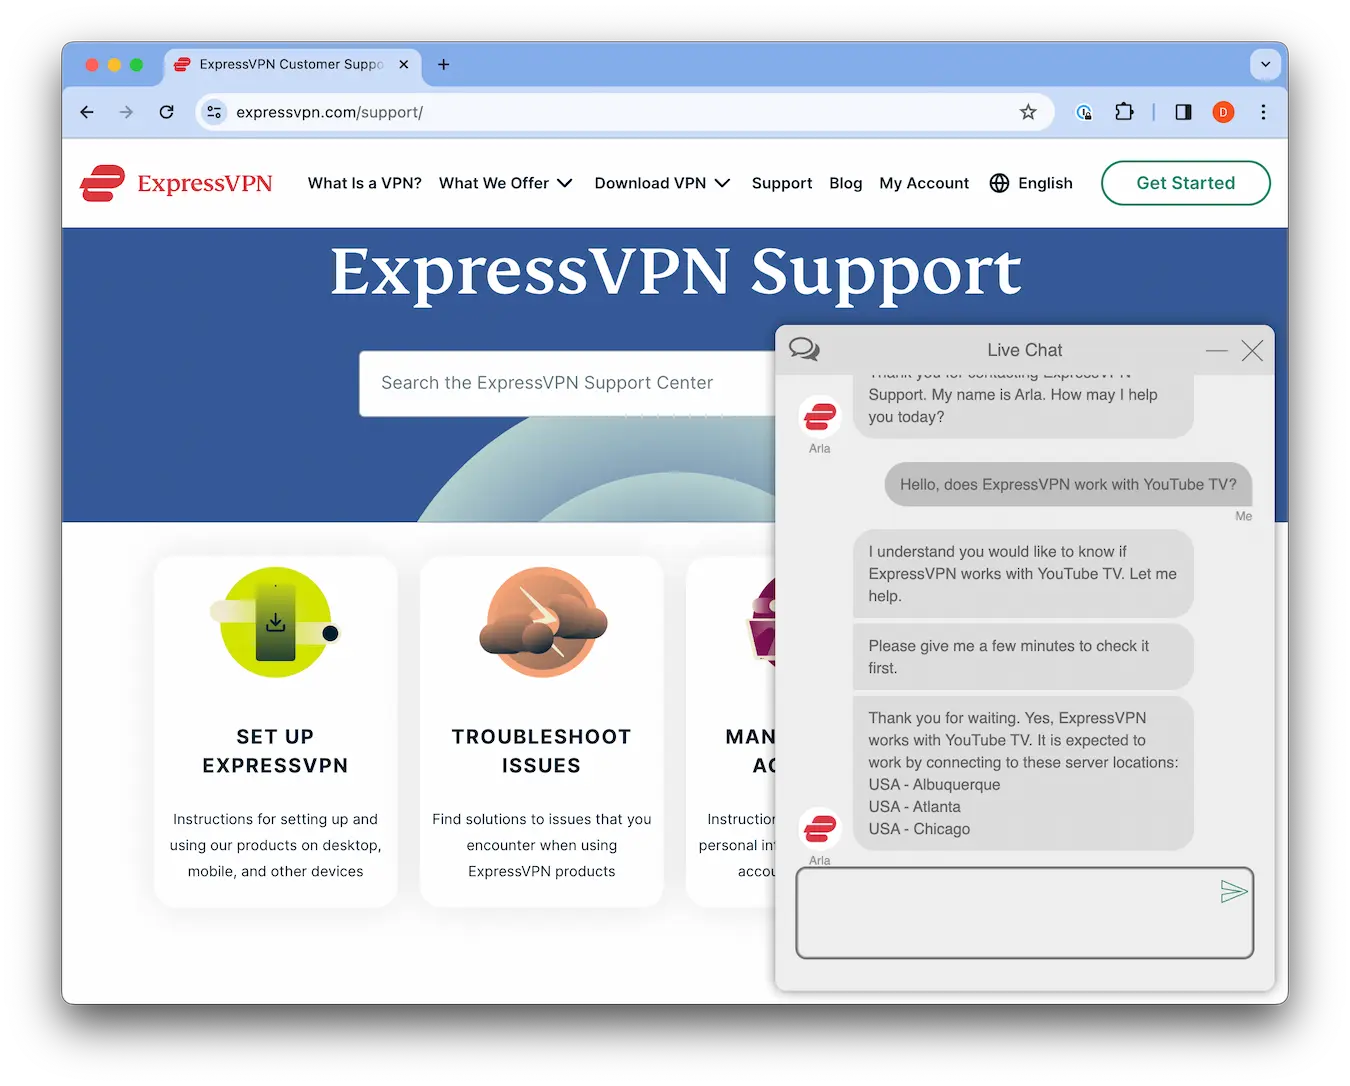 ExpressVPN Customer Support for YouTube tV